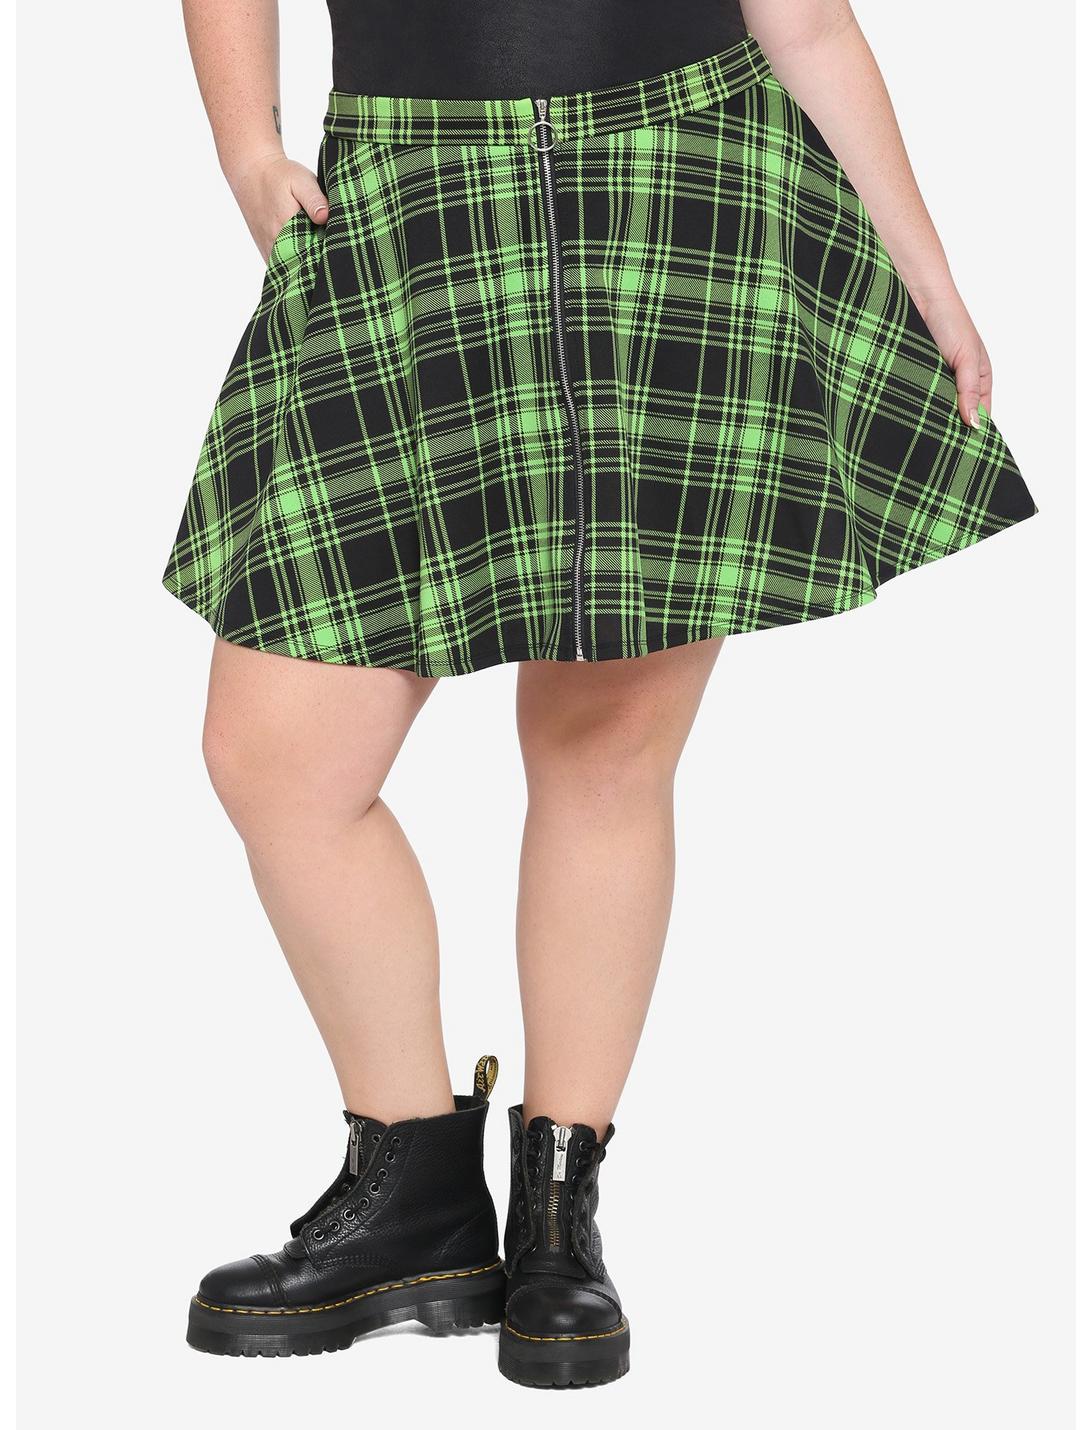 Black & Neon Green Plaid O-Ring Skater Skirt Plus Size, PLAID - GREEN, hi-res